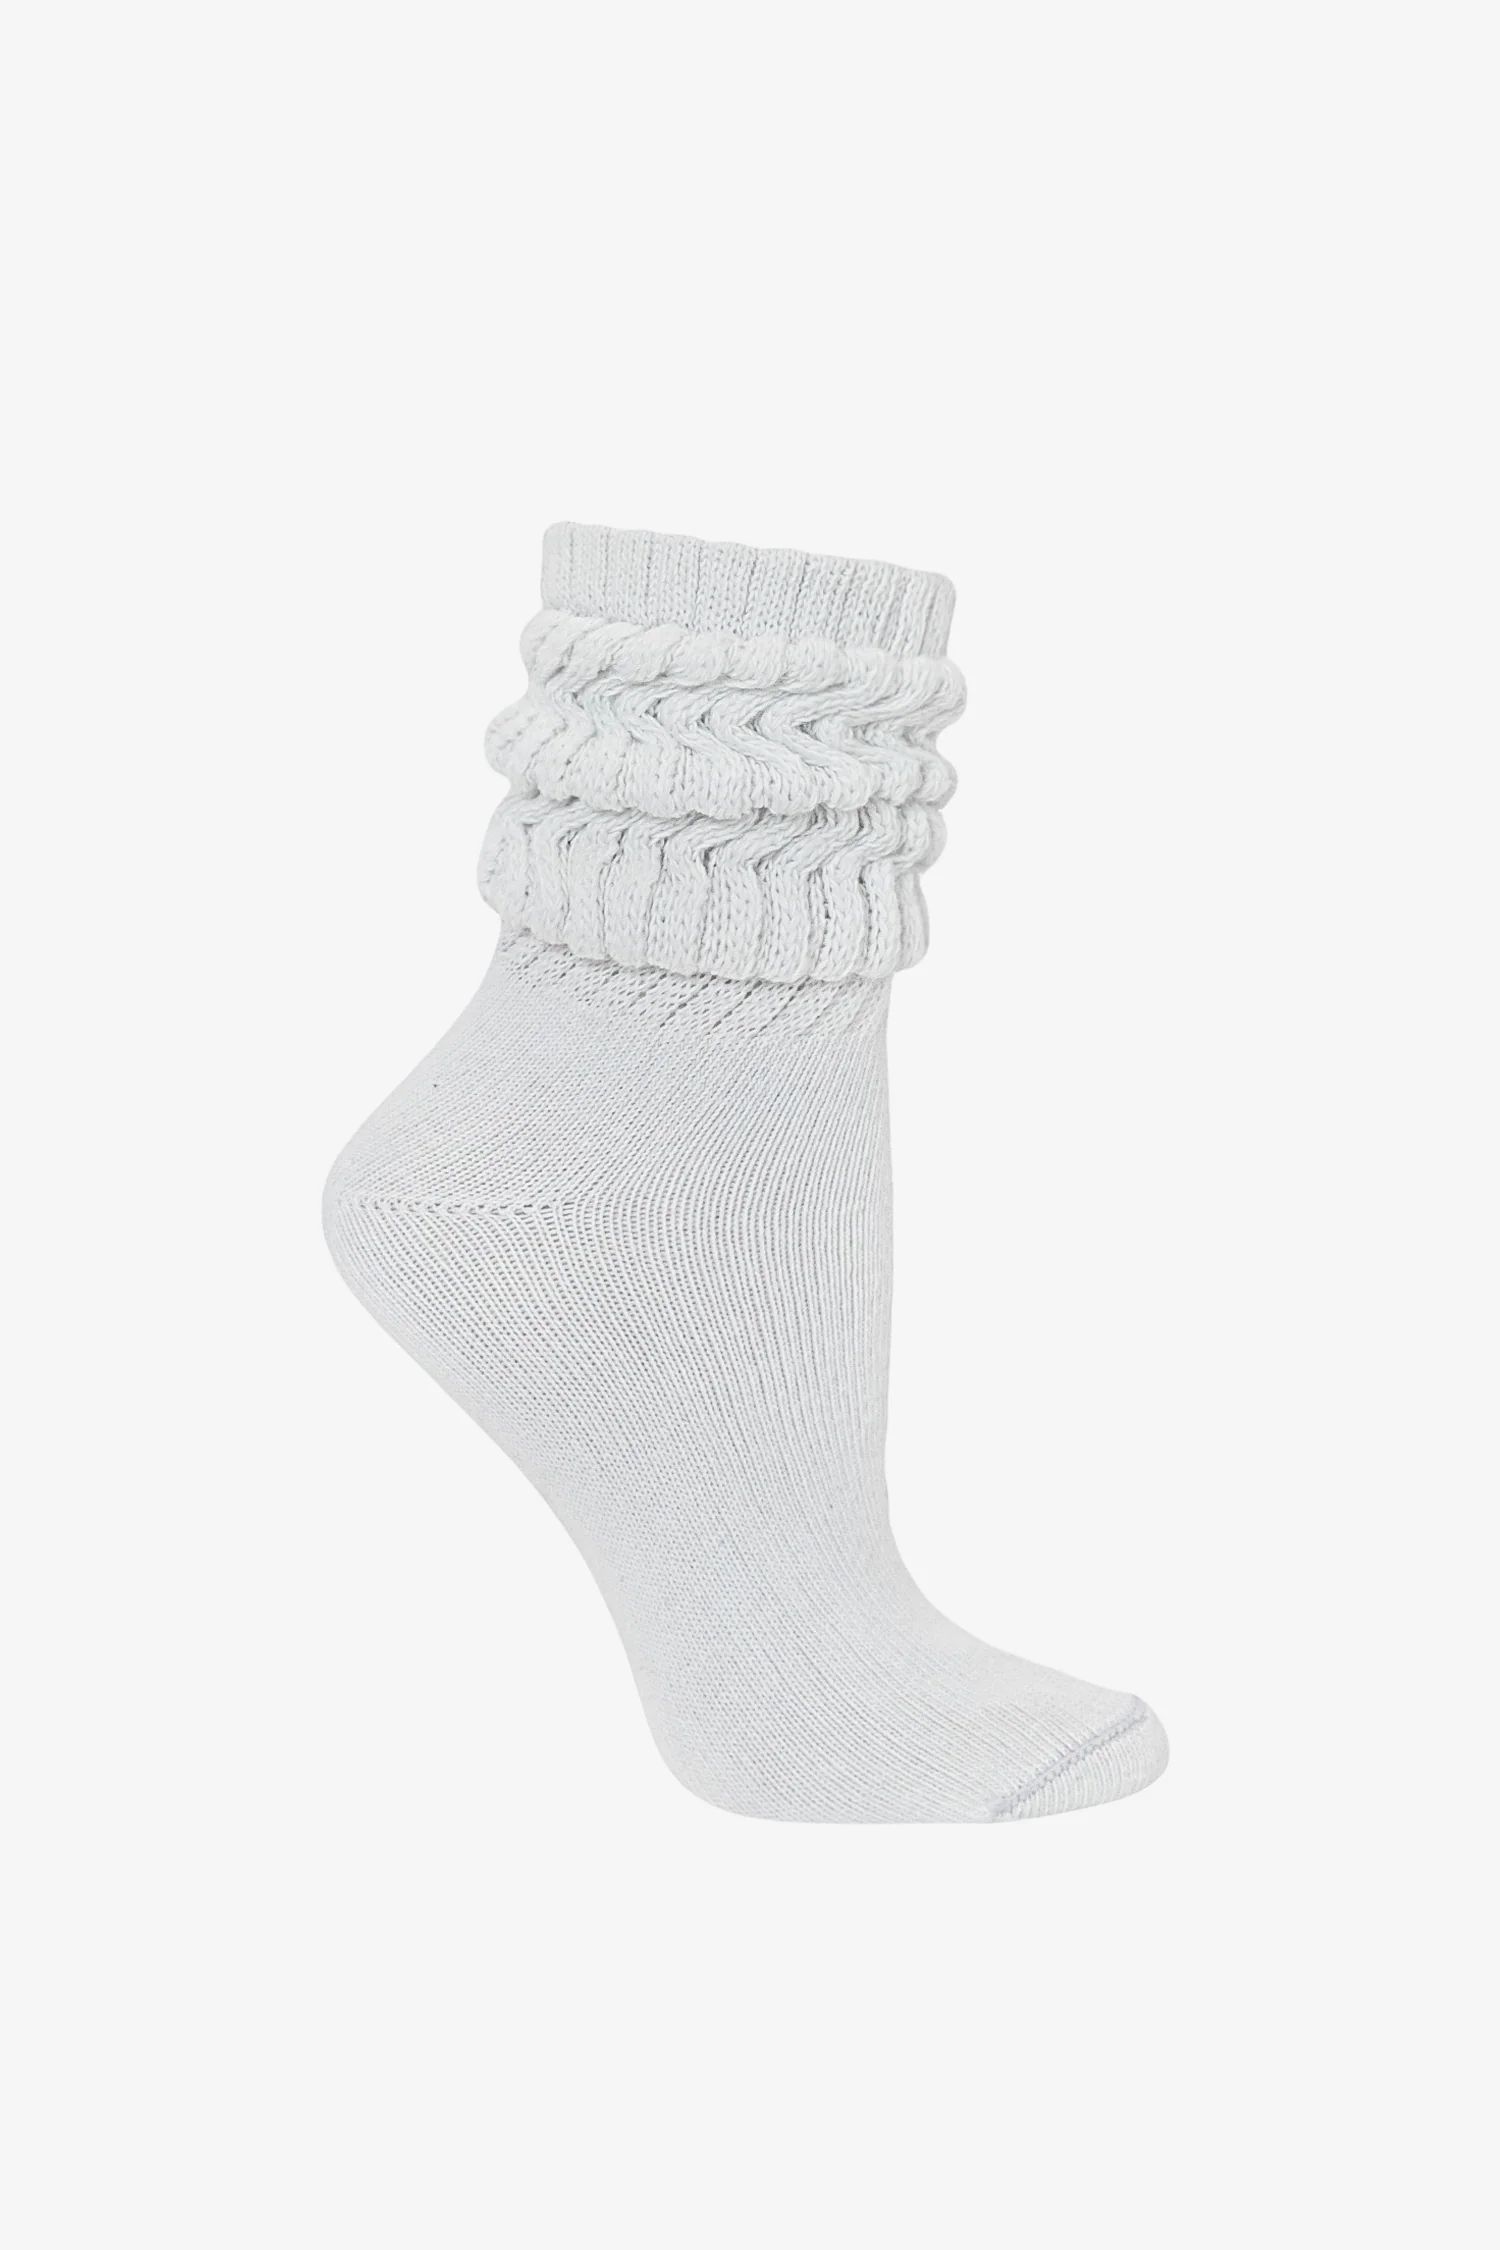 MINISLOUCH - Mini Slouch Sock | Los Angeles Apparel